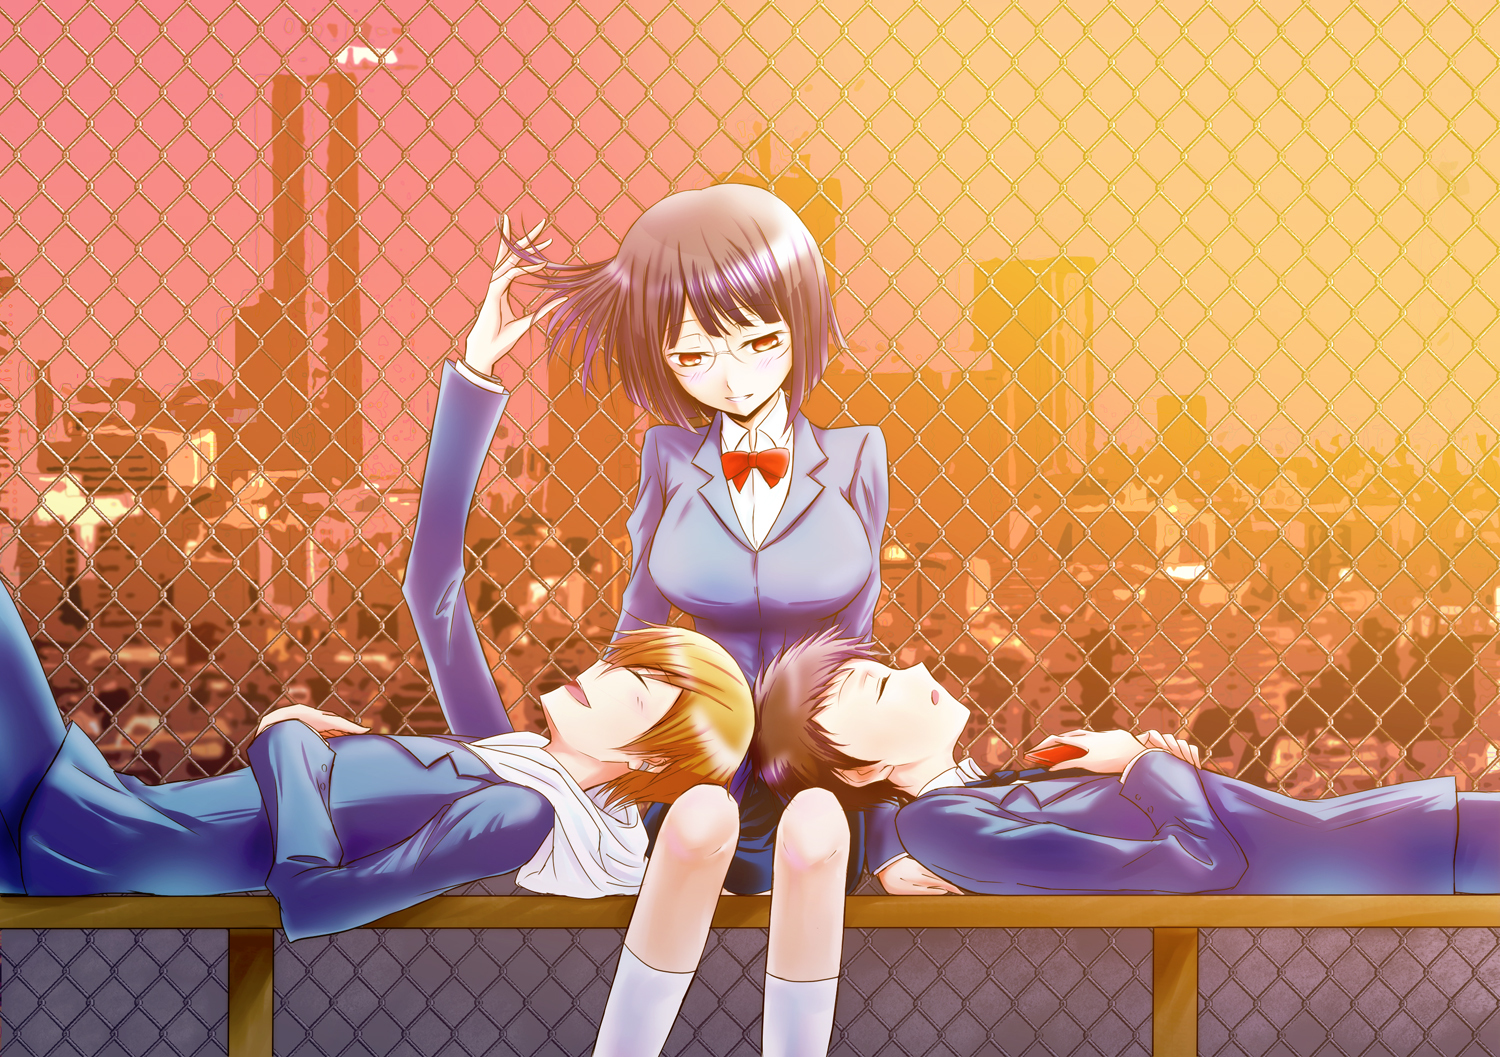 Trio of Durarara!! characters: Mikado, Anri, and Masaomi. Anime wallpaper.